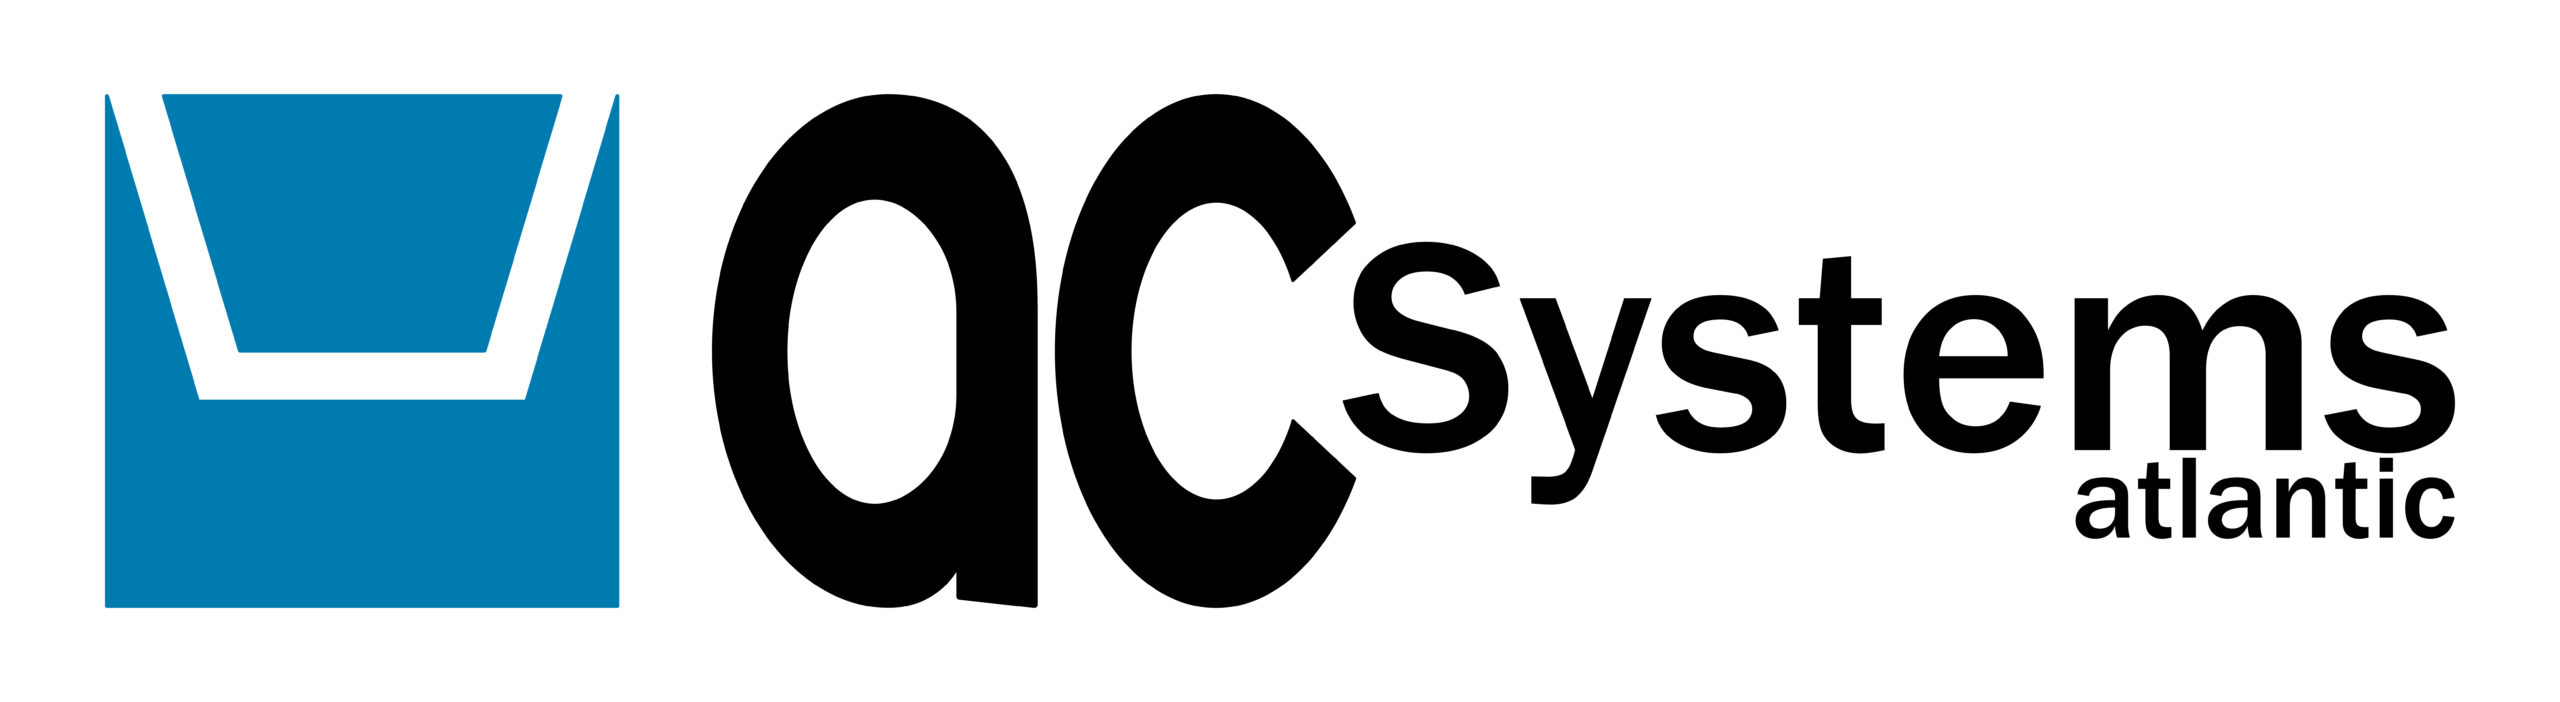 AC Systems Atlantic, S.L.U.